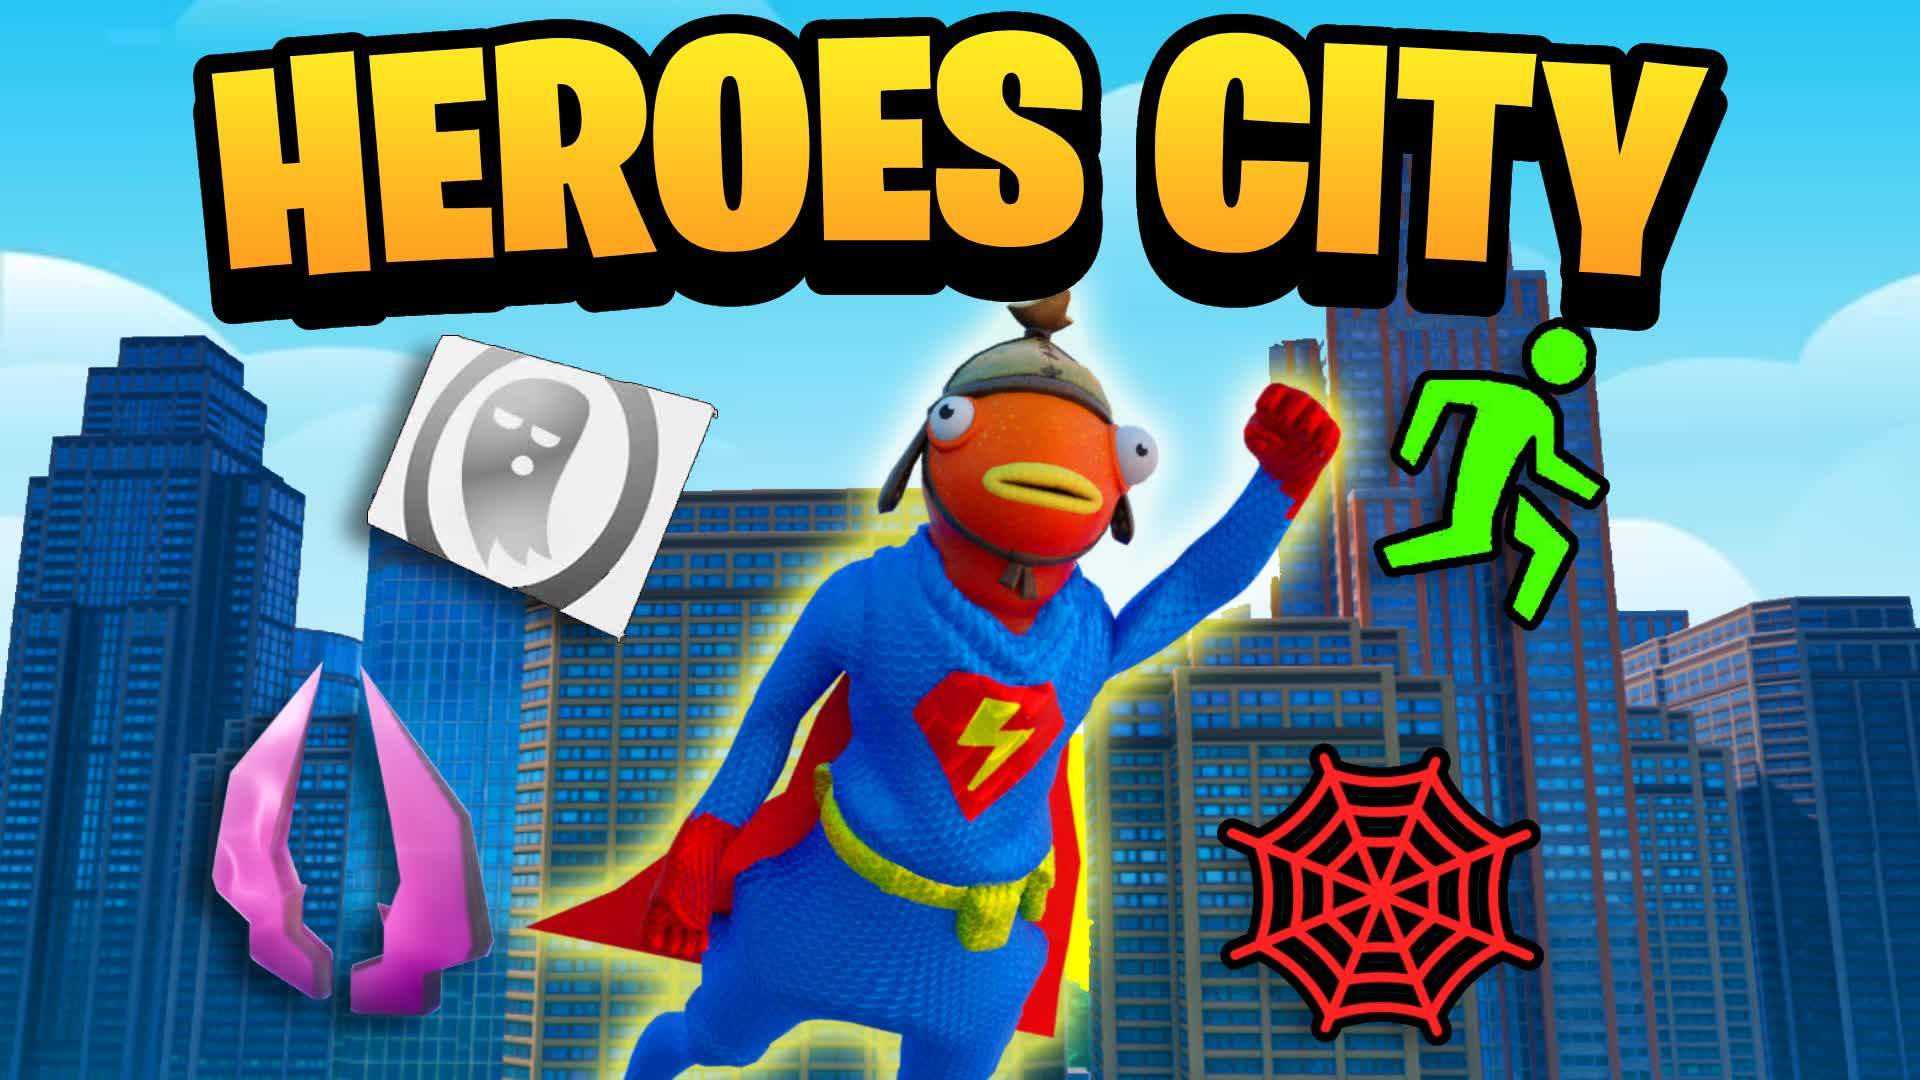 Heroes City FFA 🦸